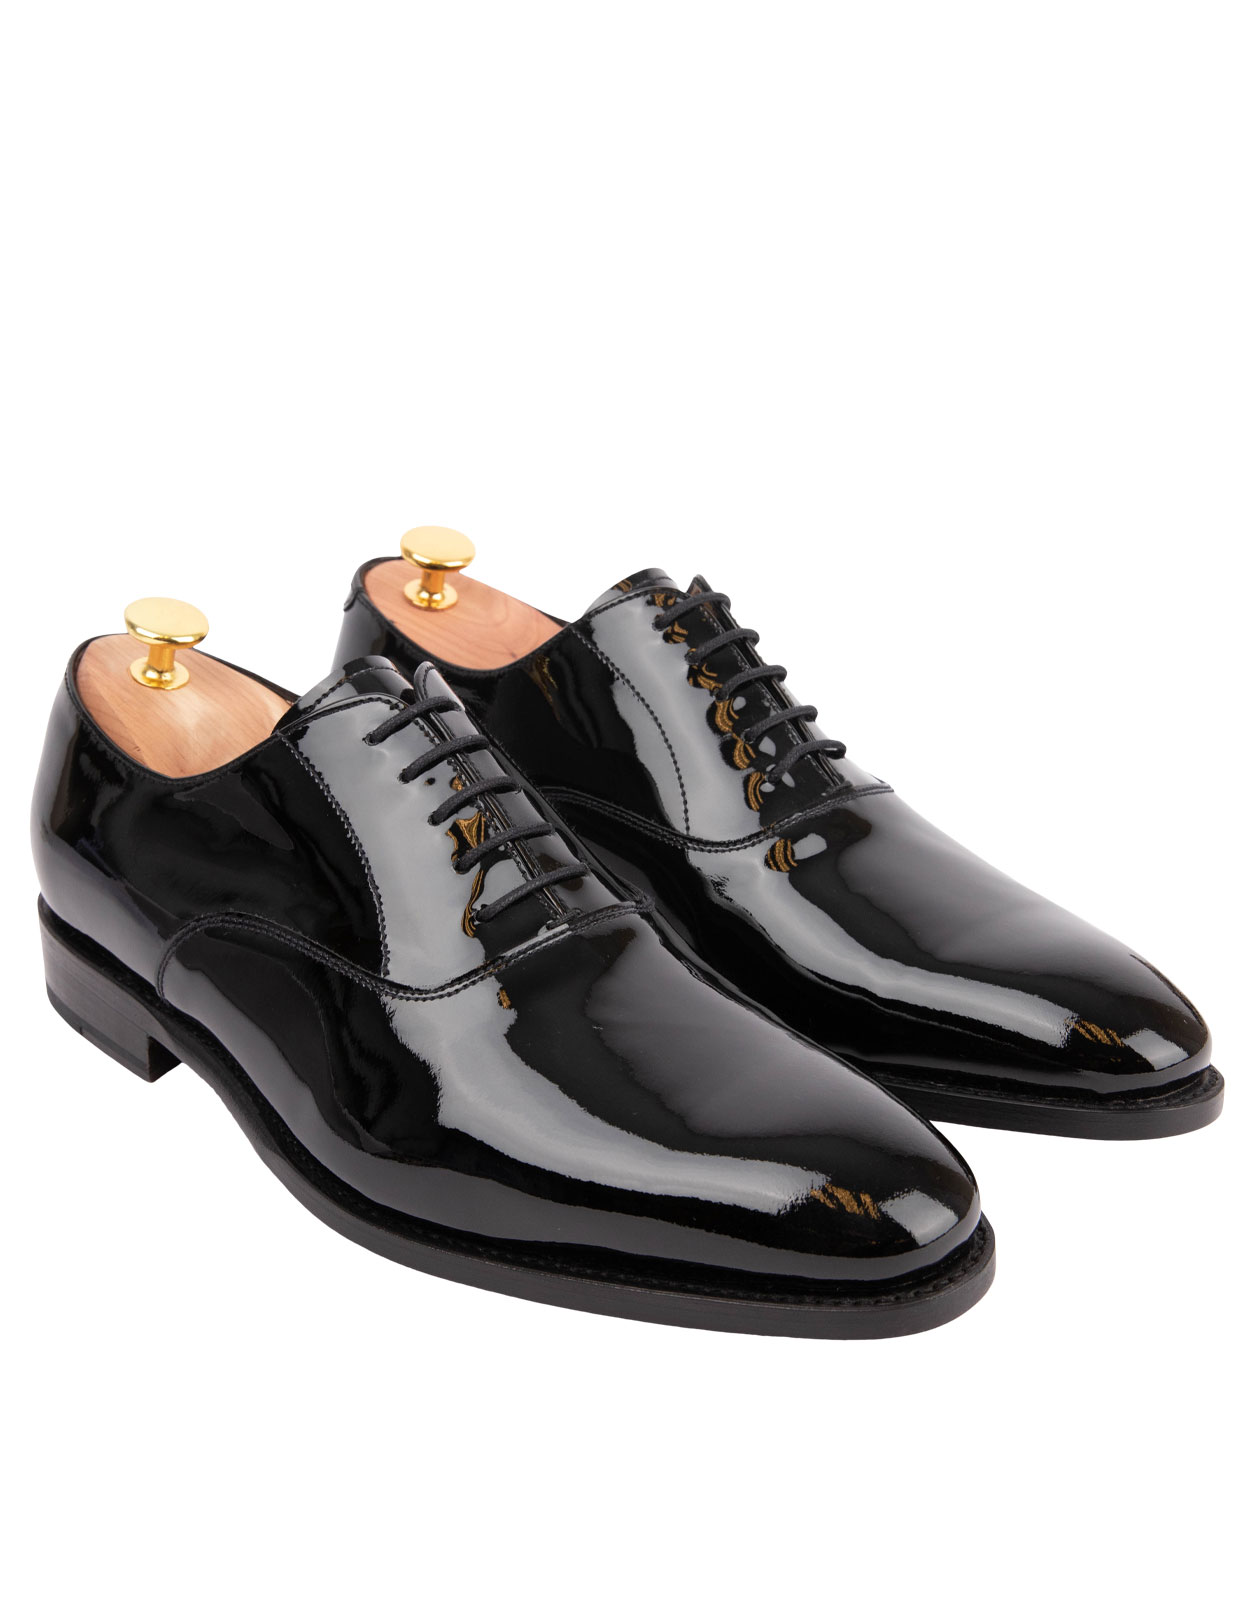 Patent Leather Oxford Shoe Black Stl 10.5